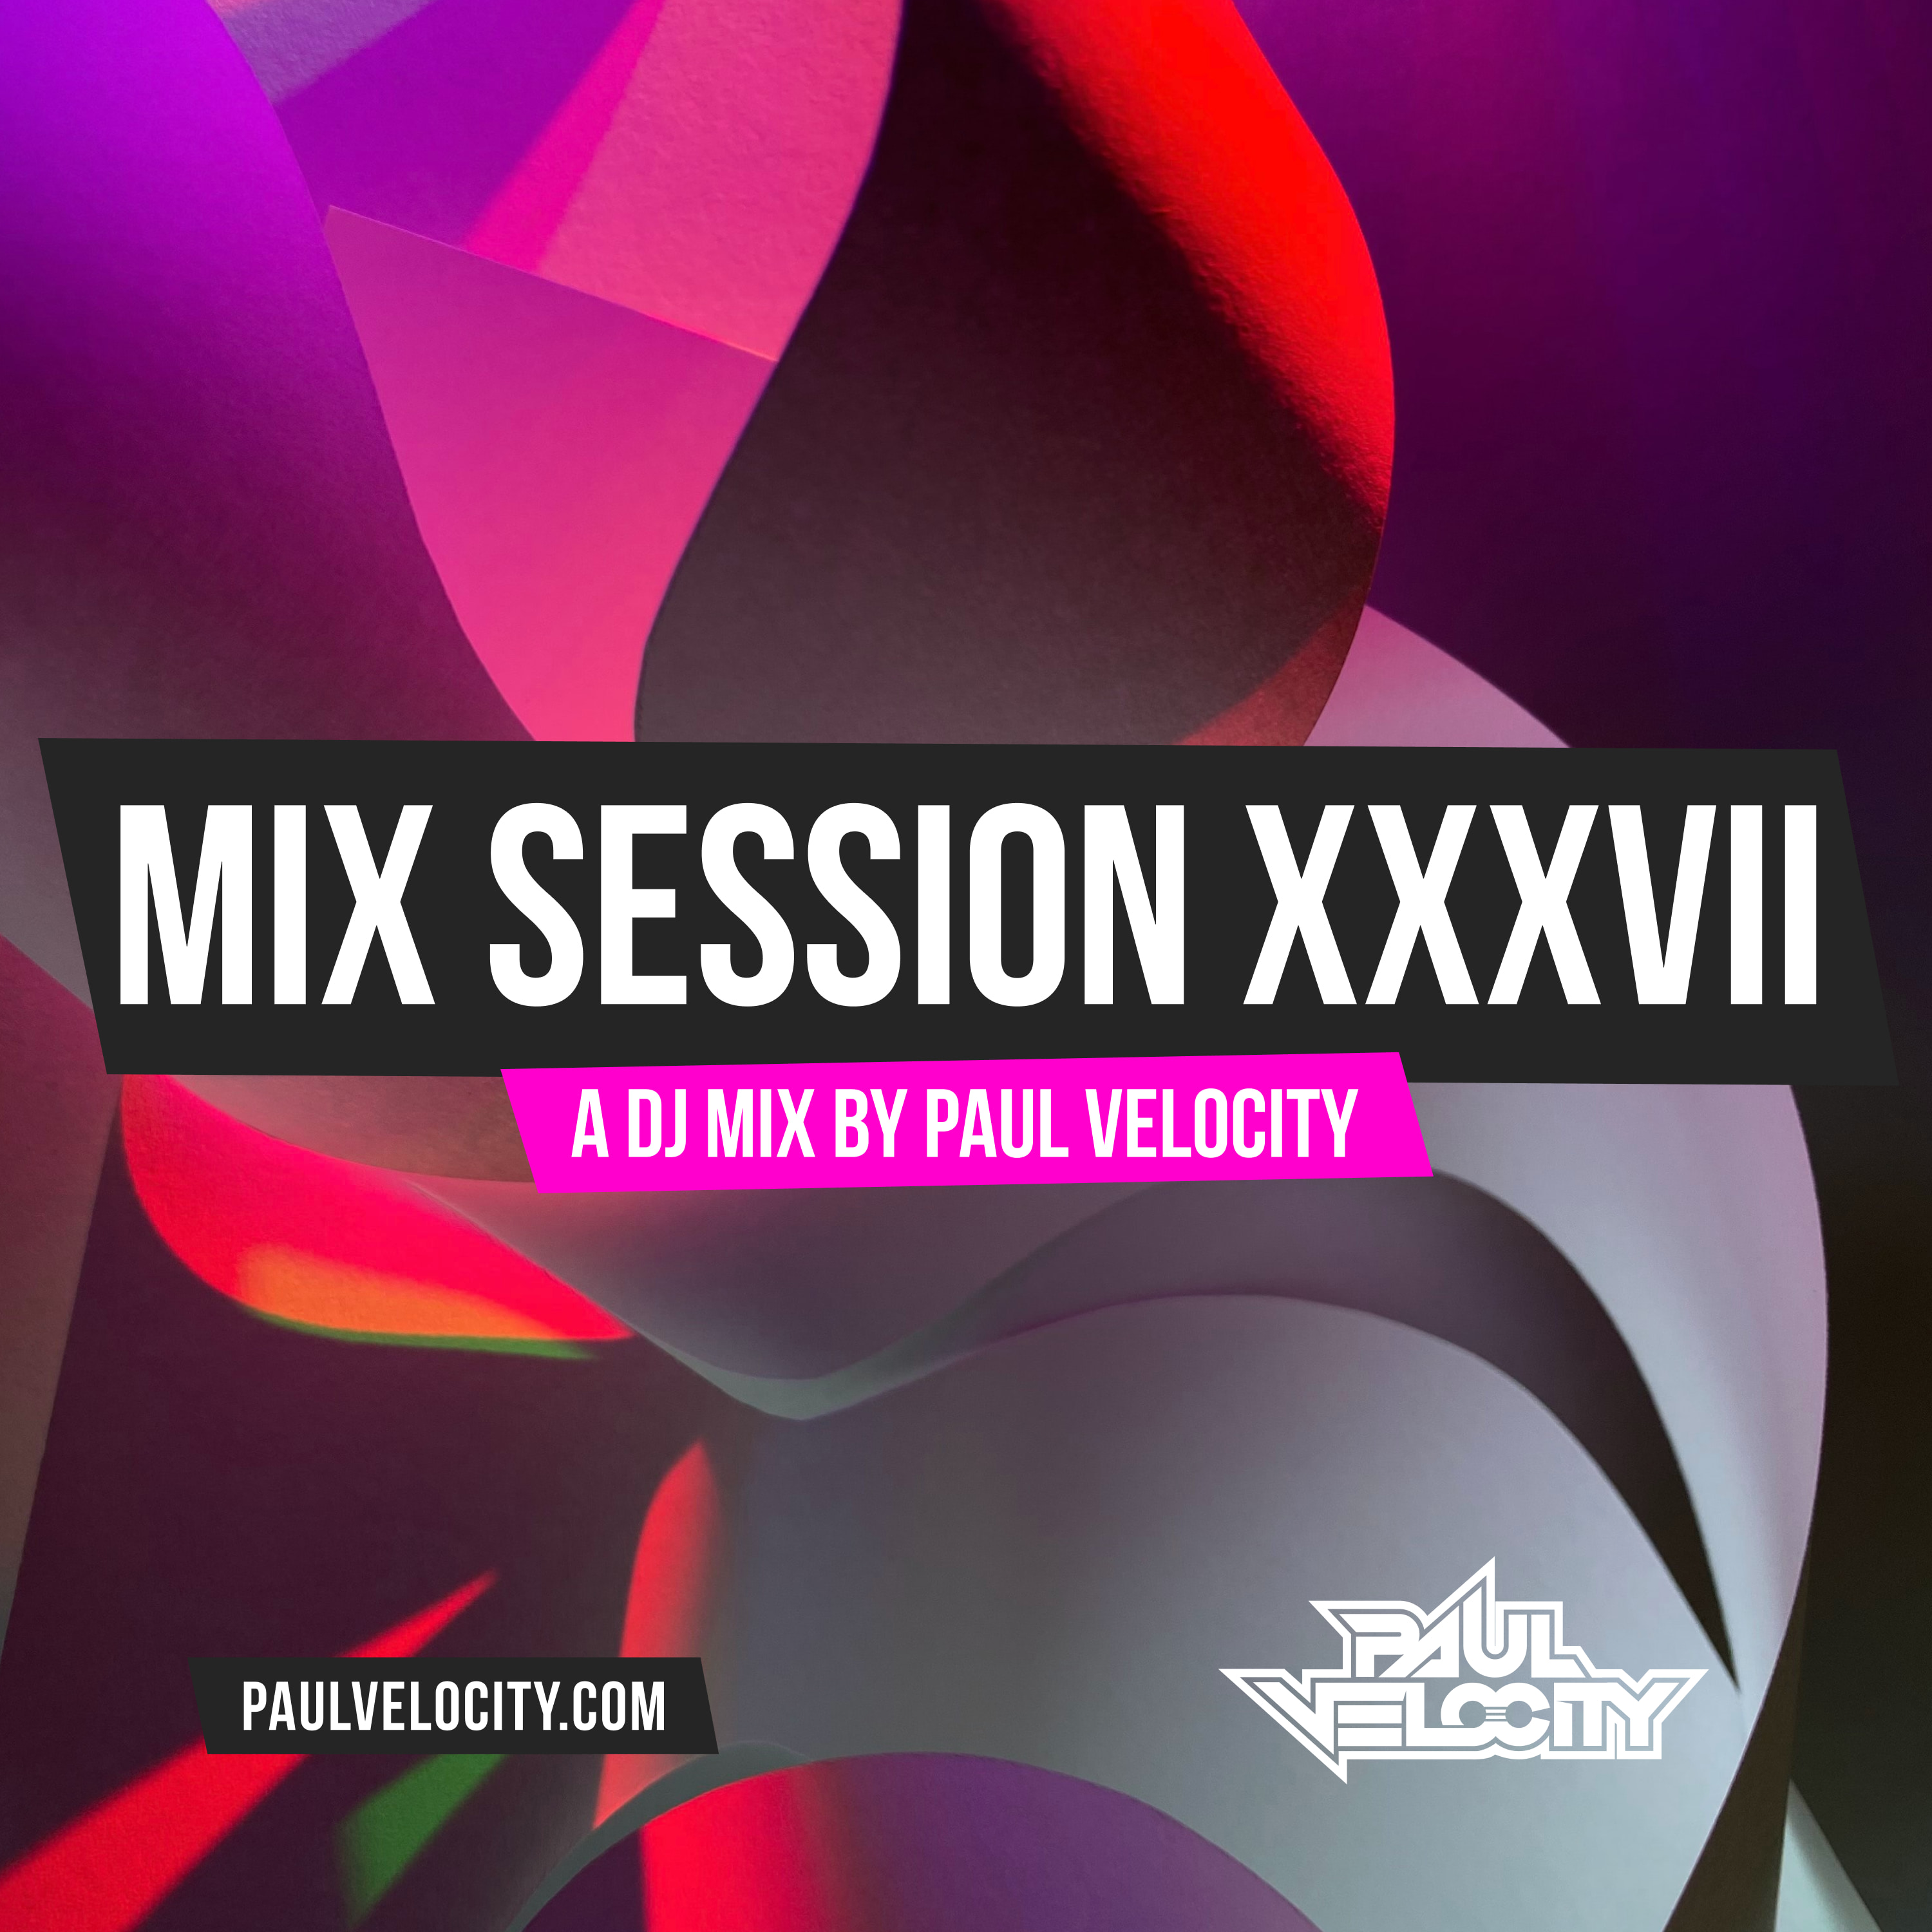 Mix Session XXXVII